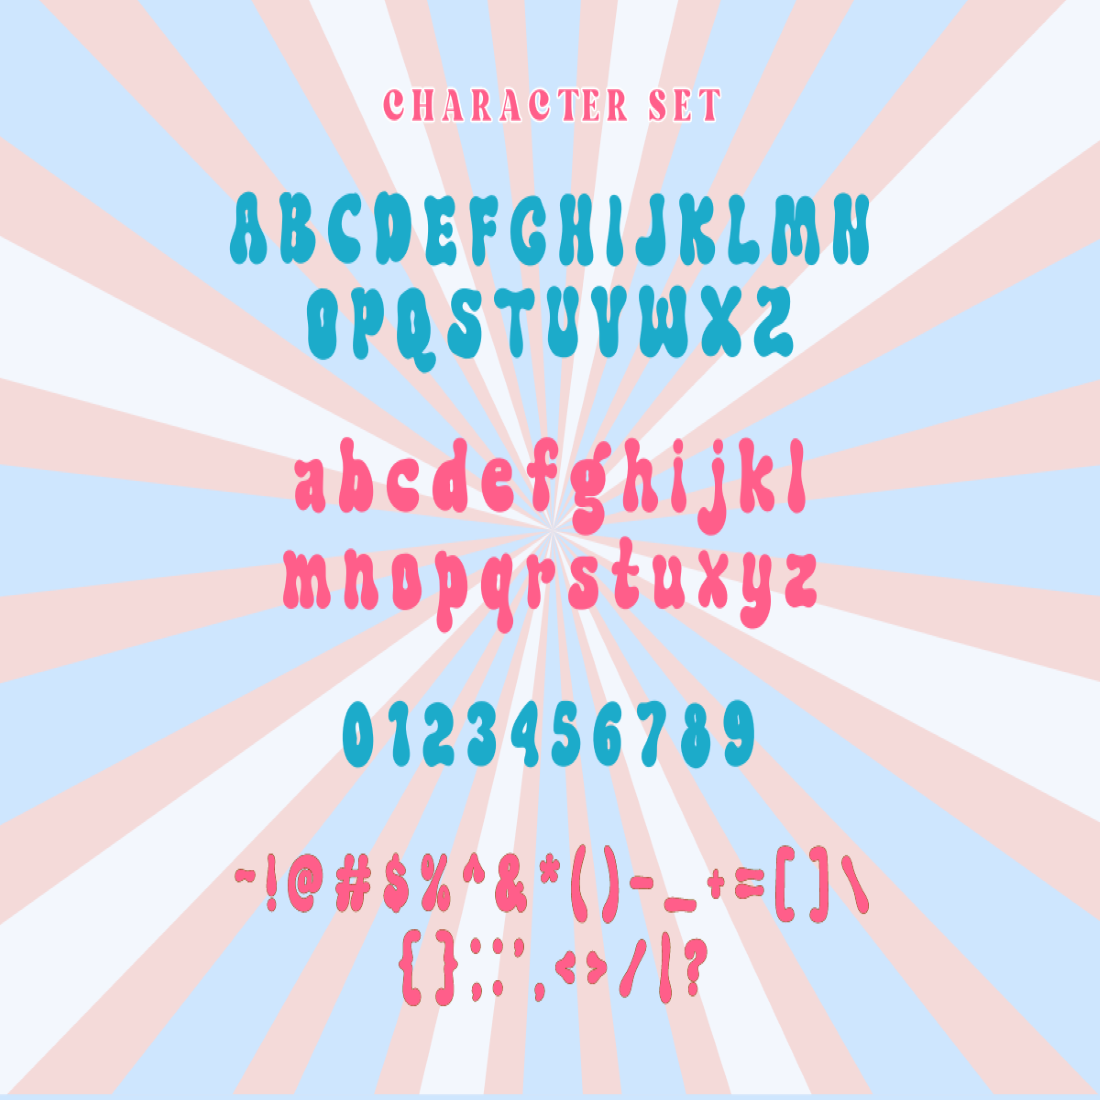 09 swipe soul fun retro groovy font character uppercase lowercase number punchtuation custom custom 625